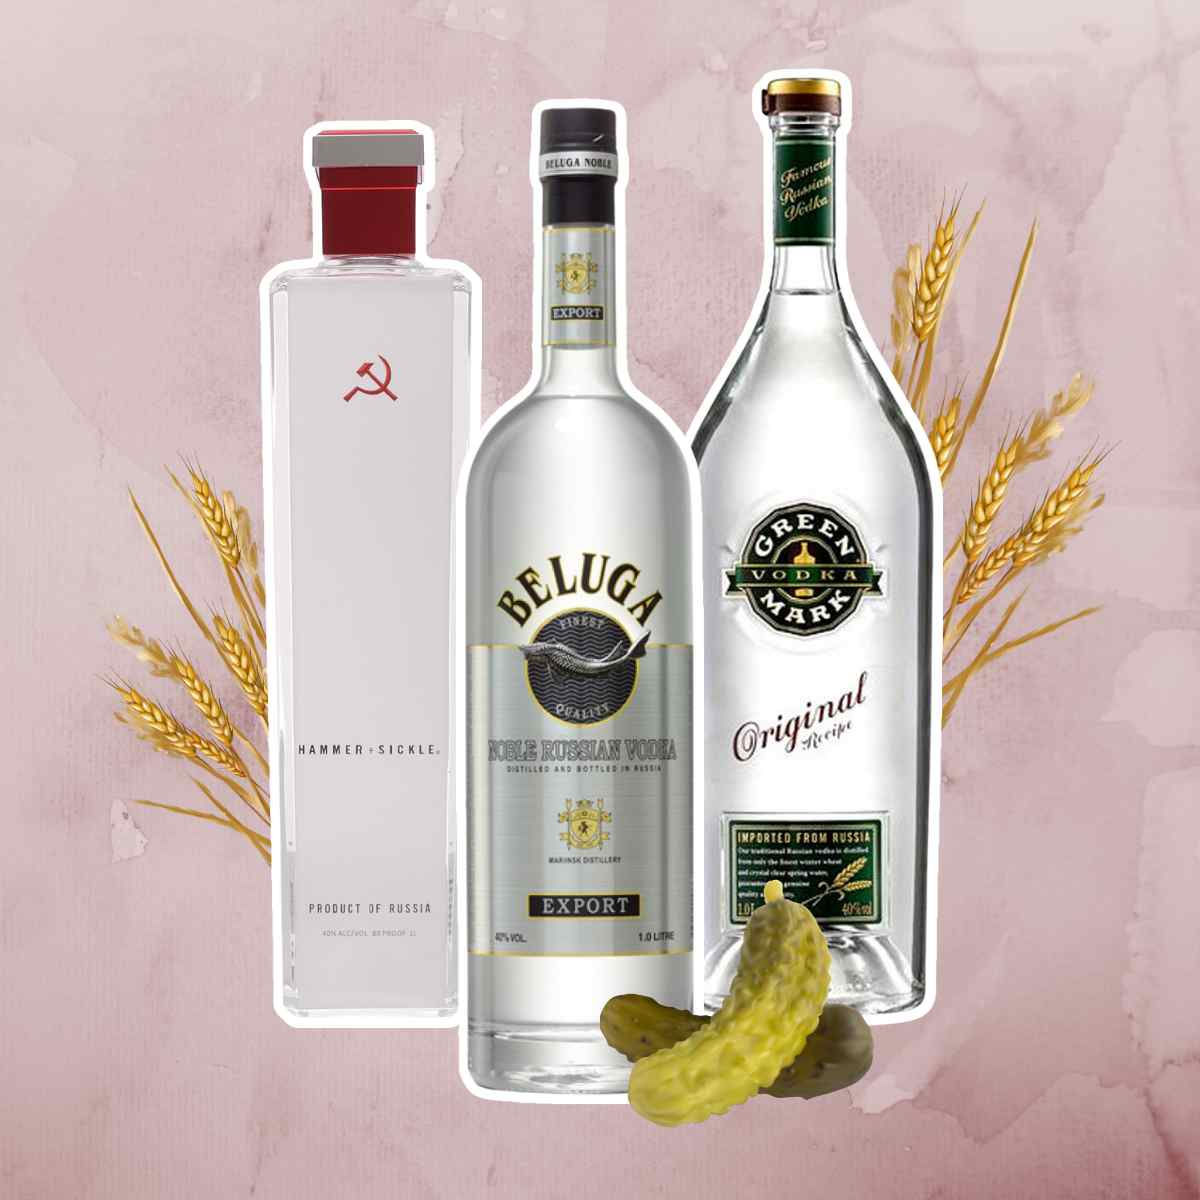 Bottles of the three best Russian Vodka brands - Beluga, Hammer & Sickle, Green Mark